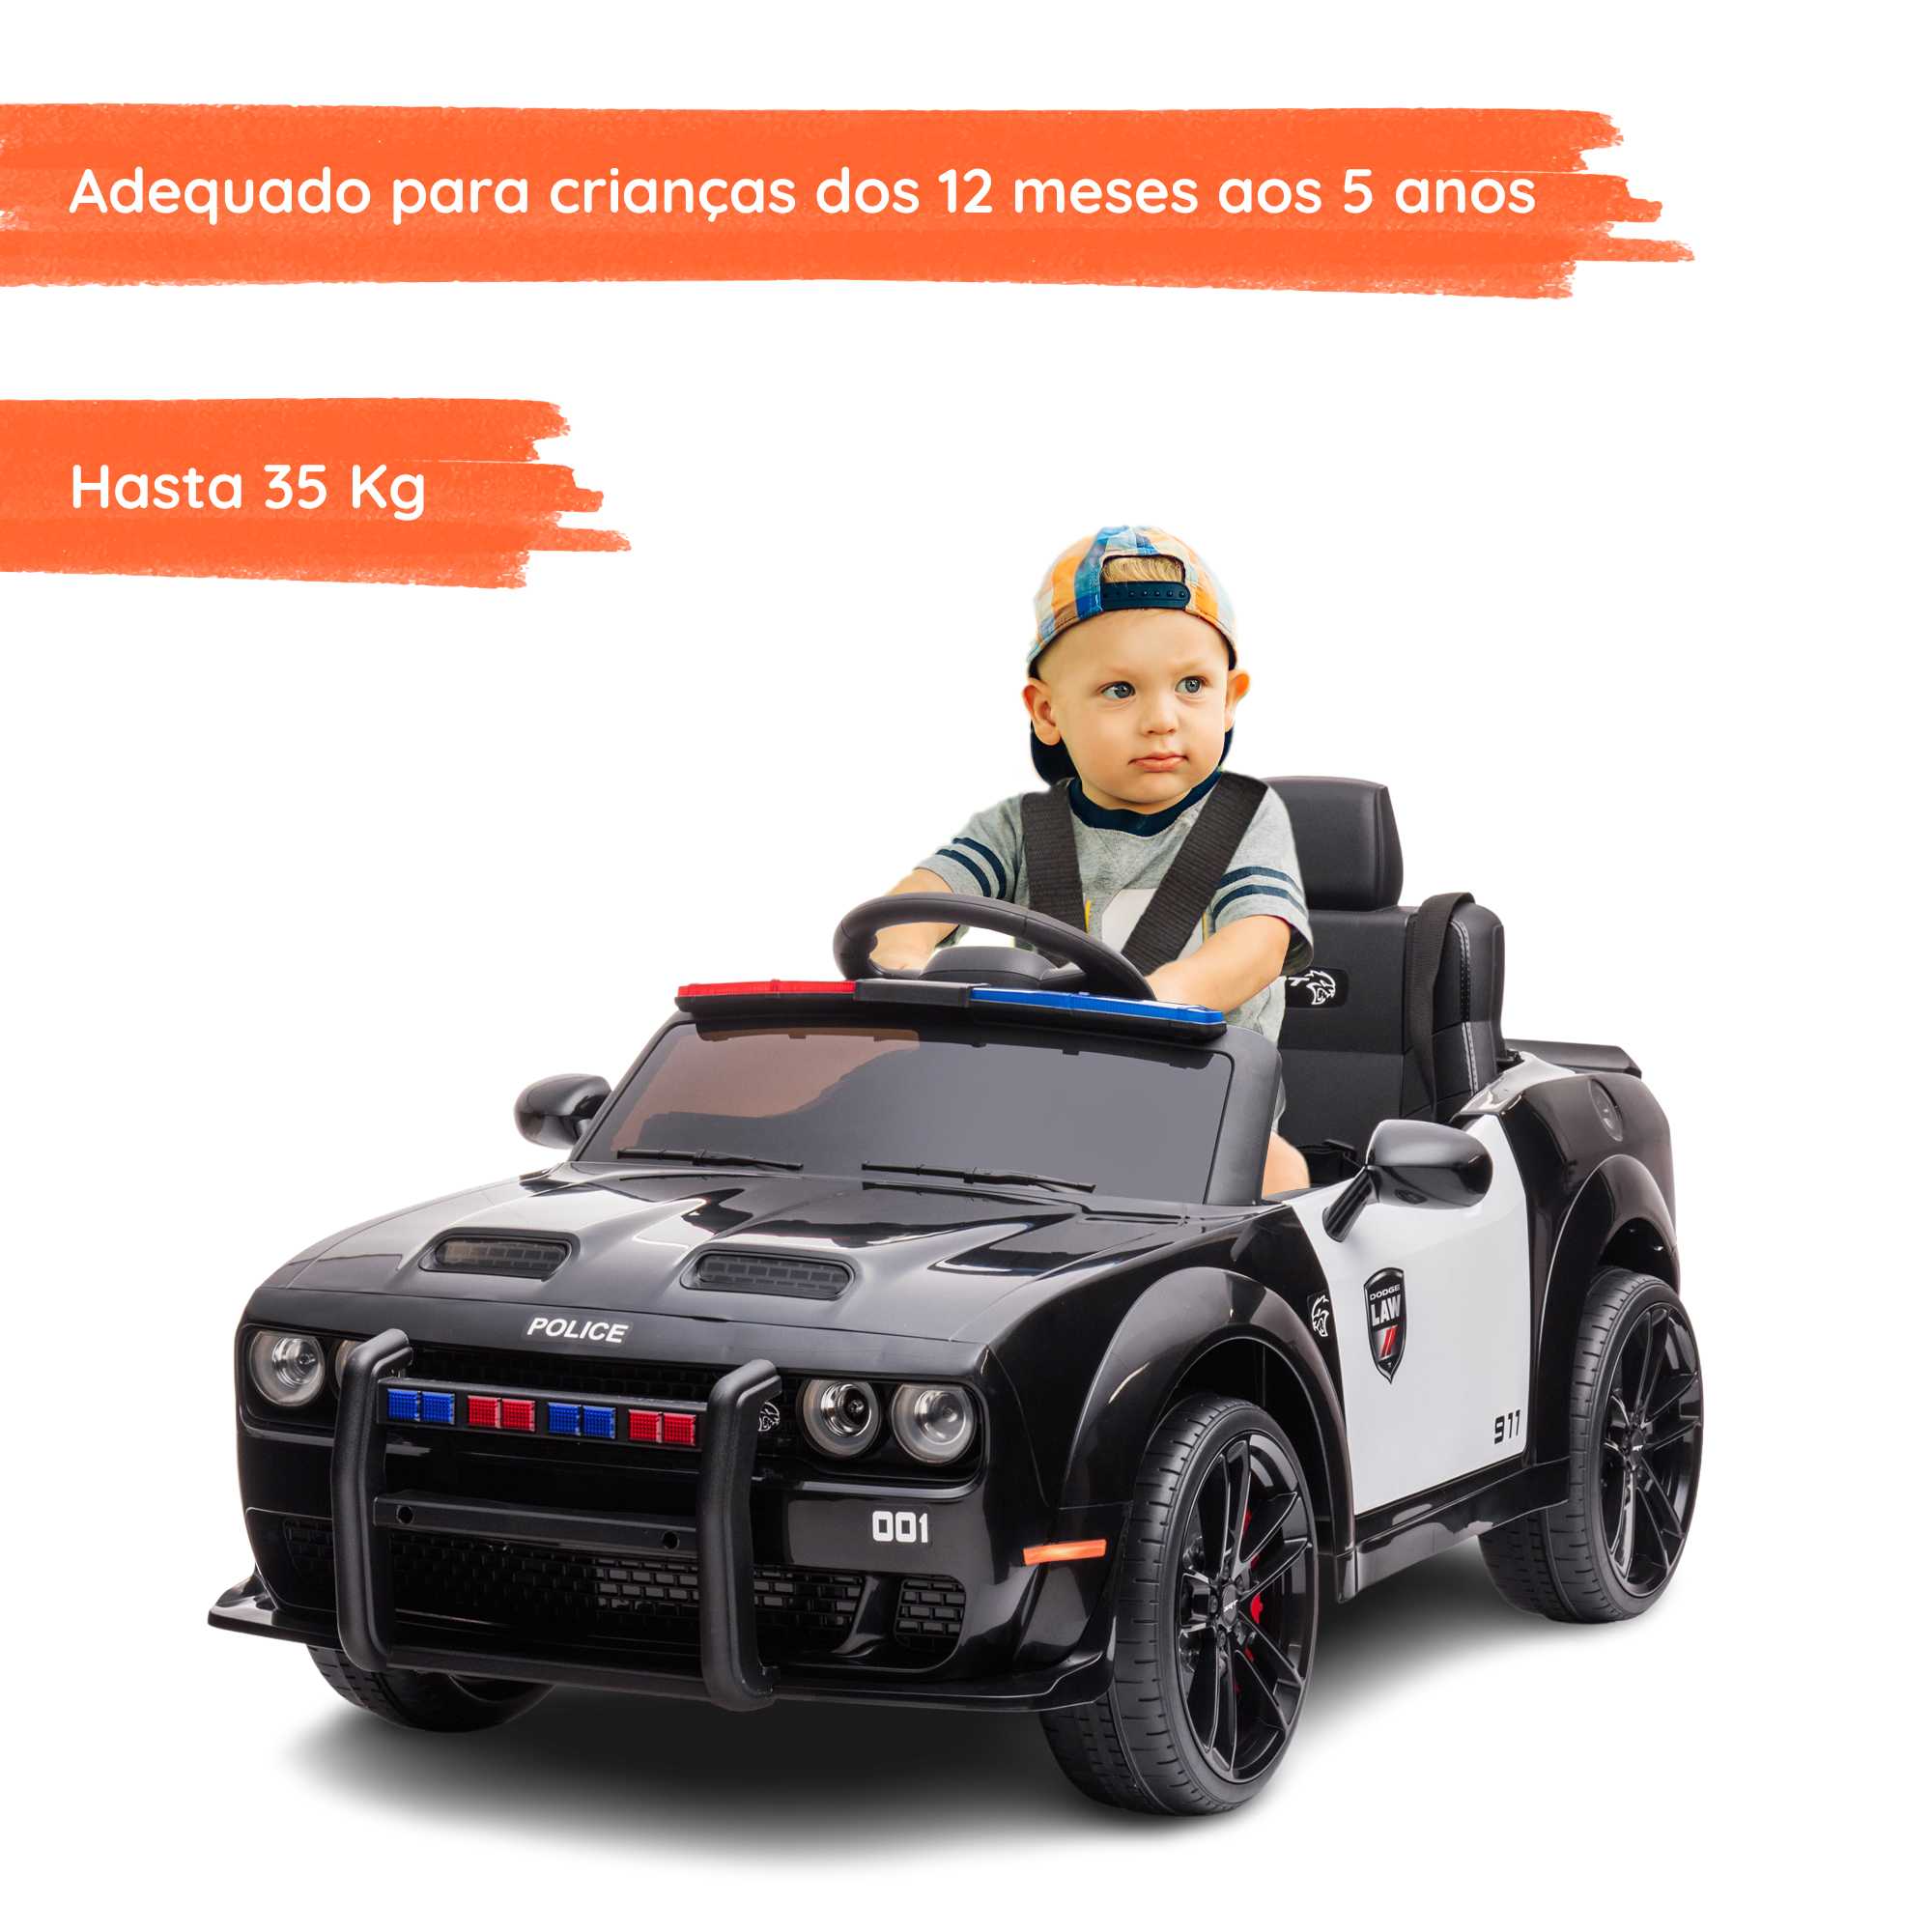 Dodge Police con niño